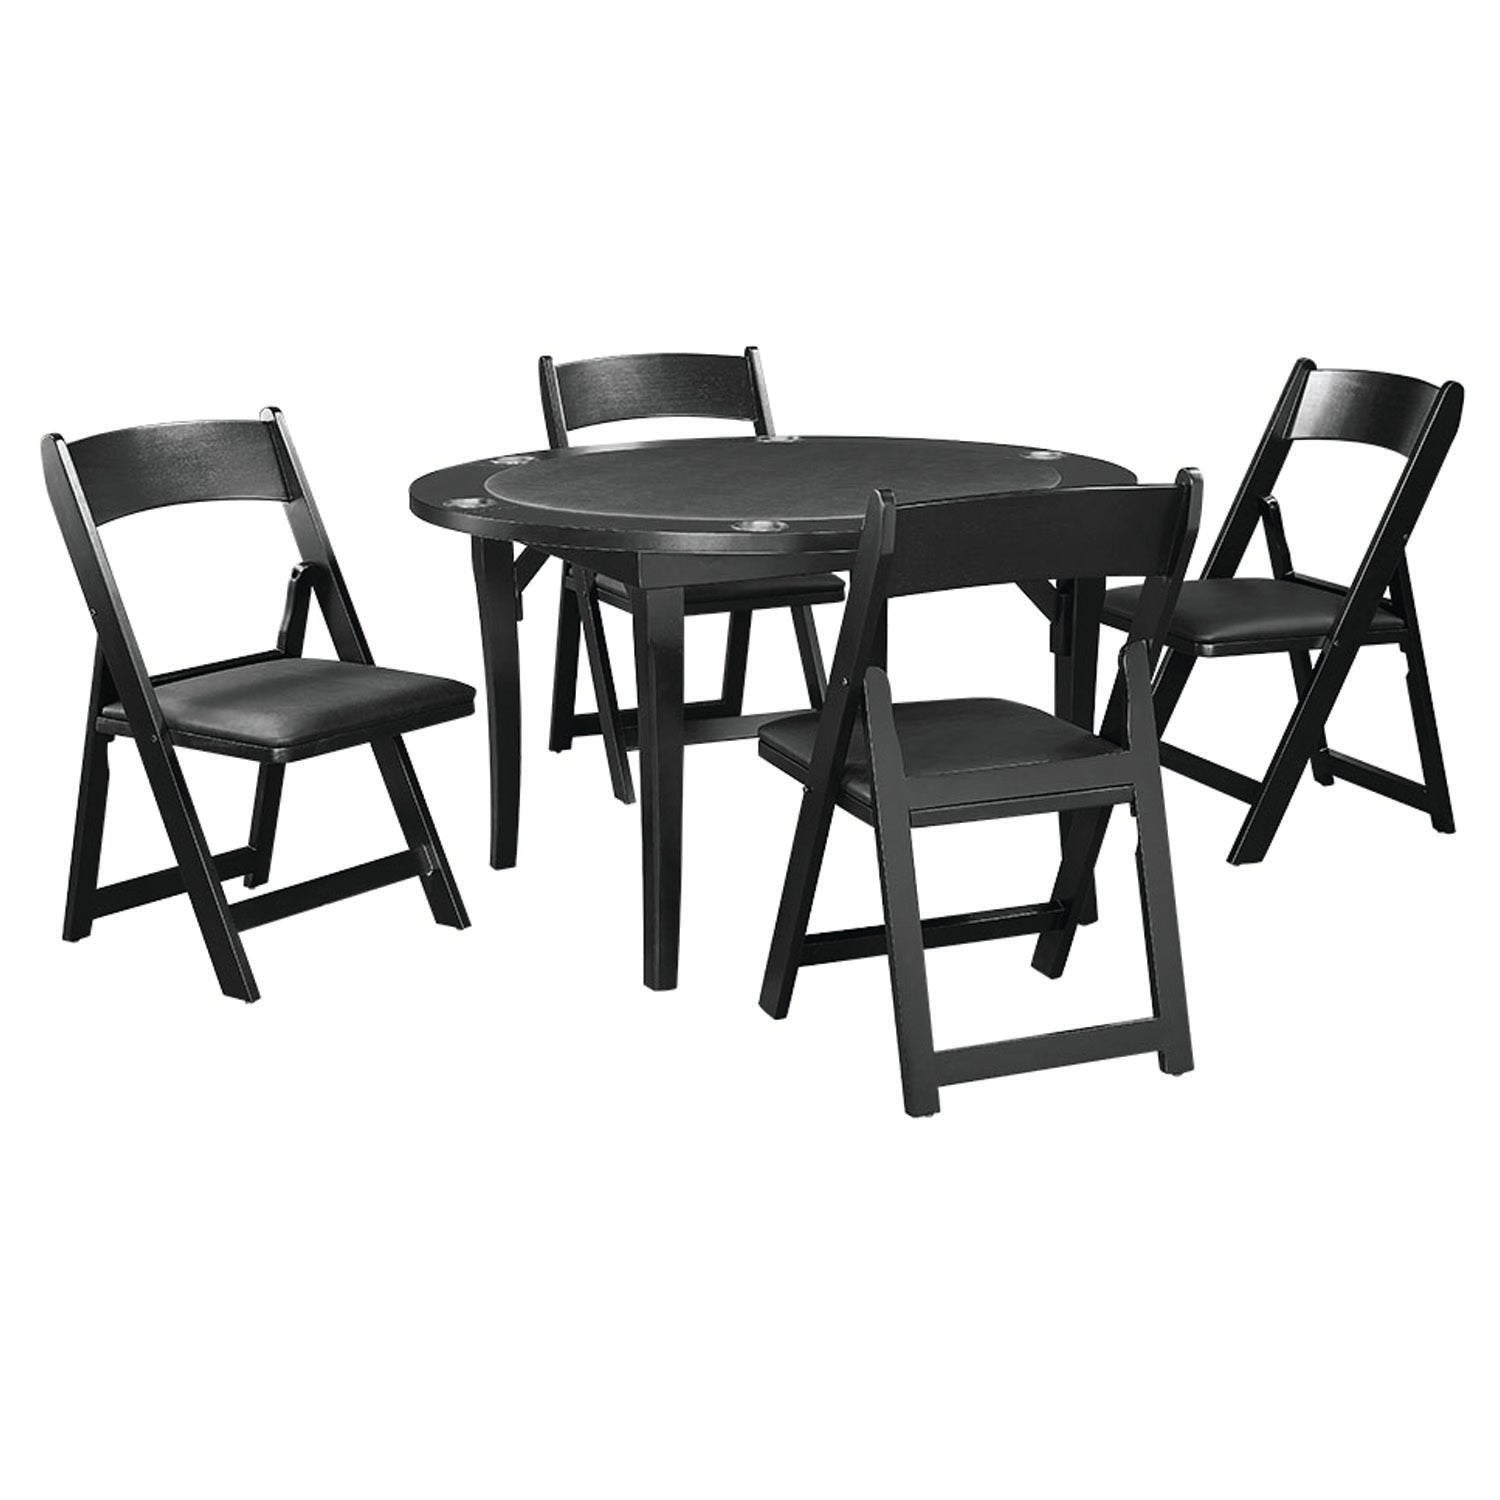 48 Inch Round Adjustable Poker Table, Black